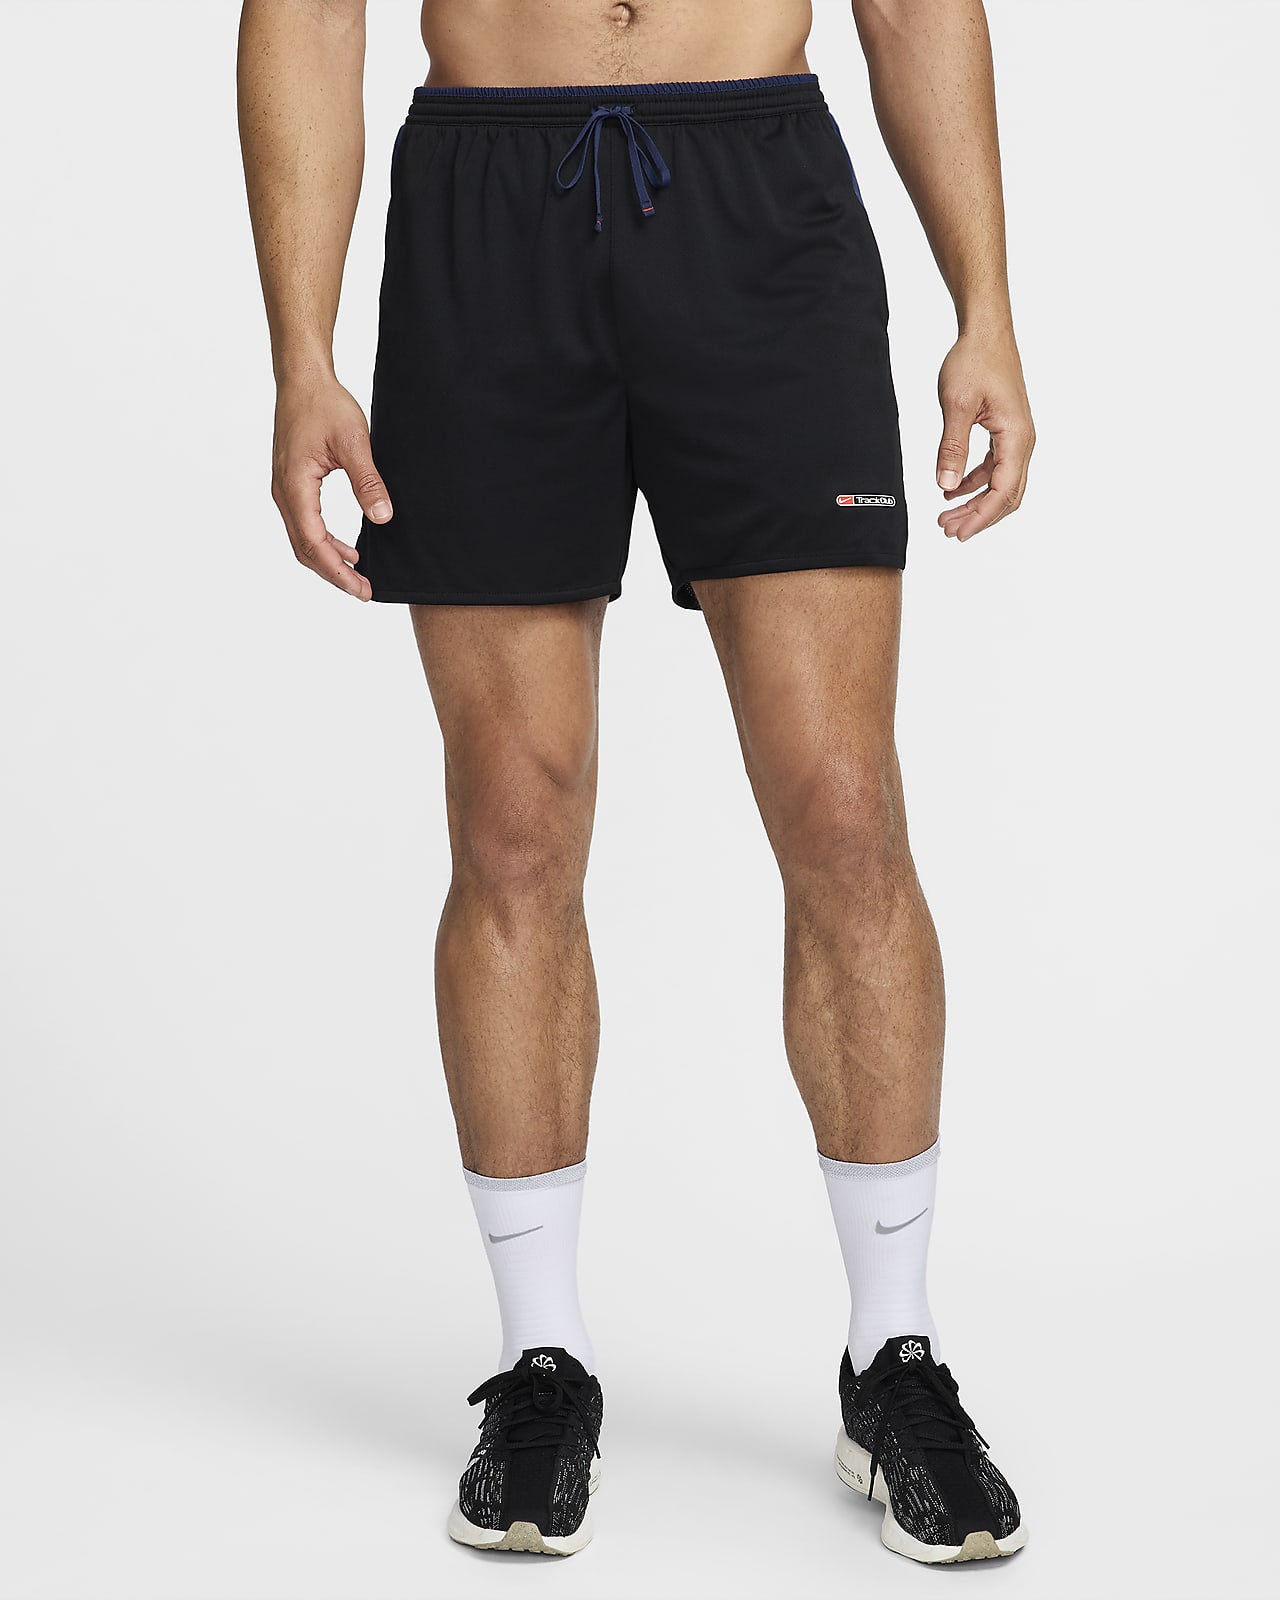 Nike Track Club Dri-FIT 13 cm-es belső rövidnadrággal bélelt férfi futórövidnadrág